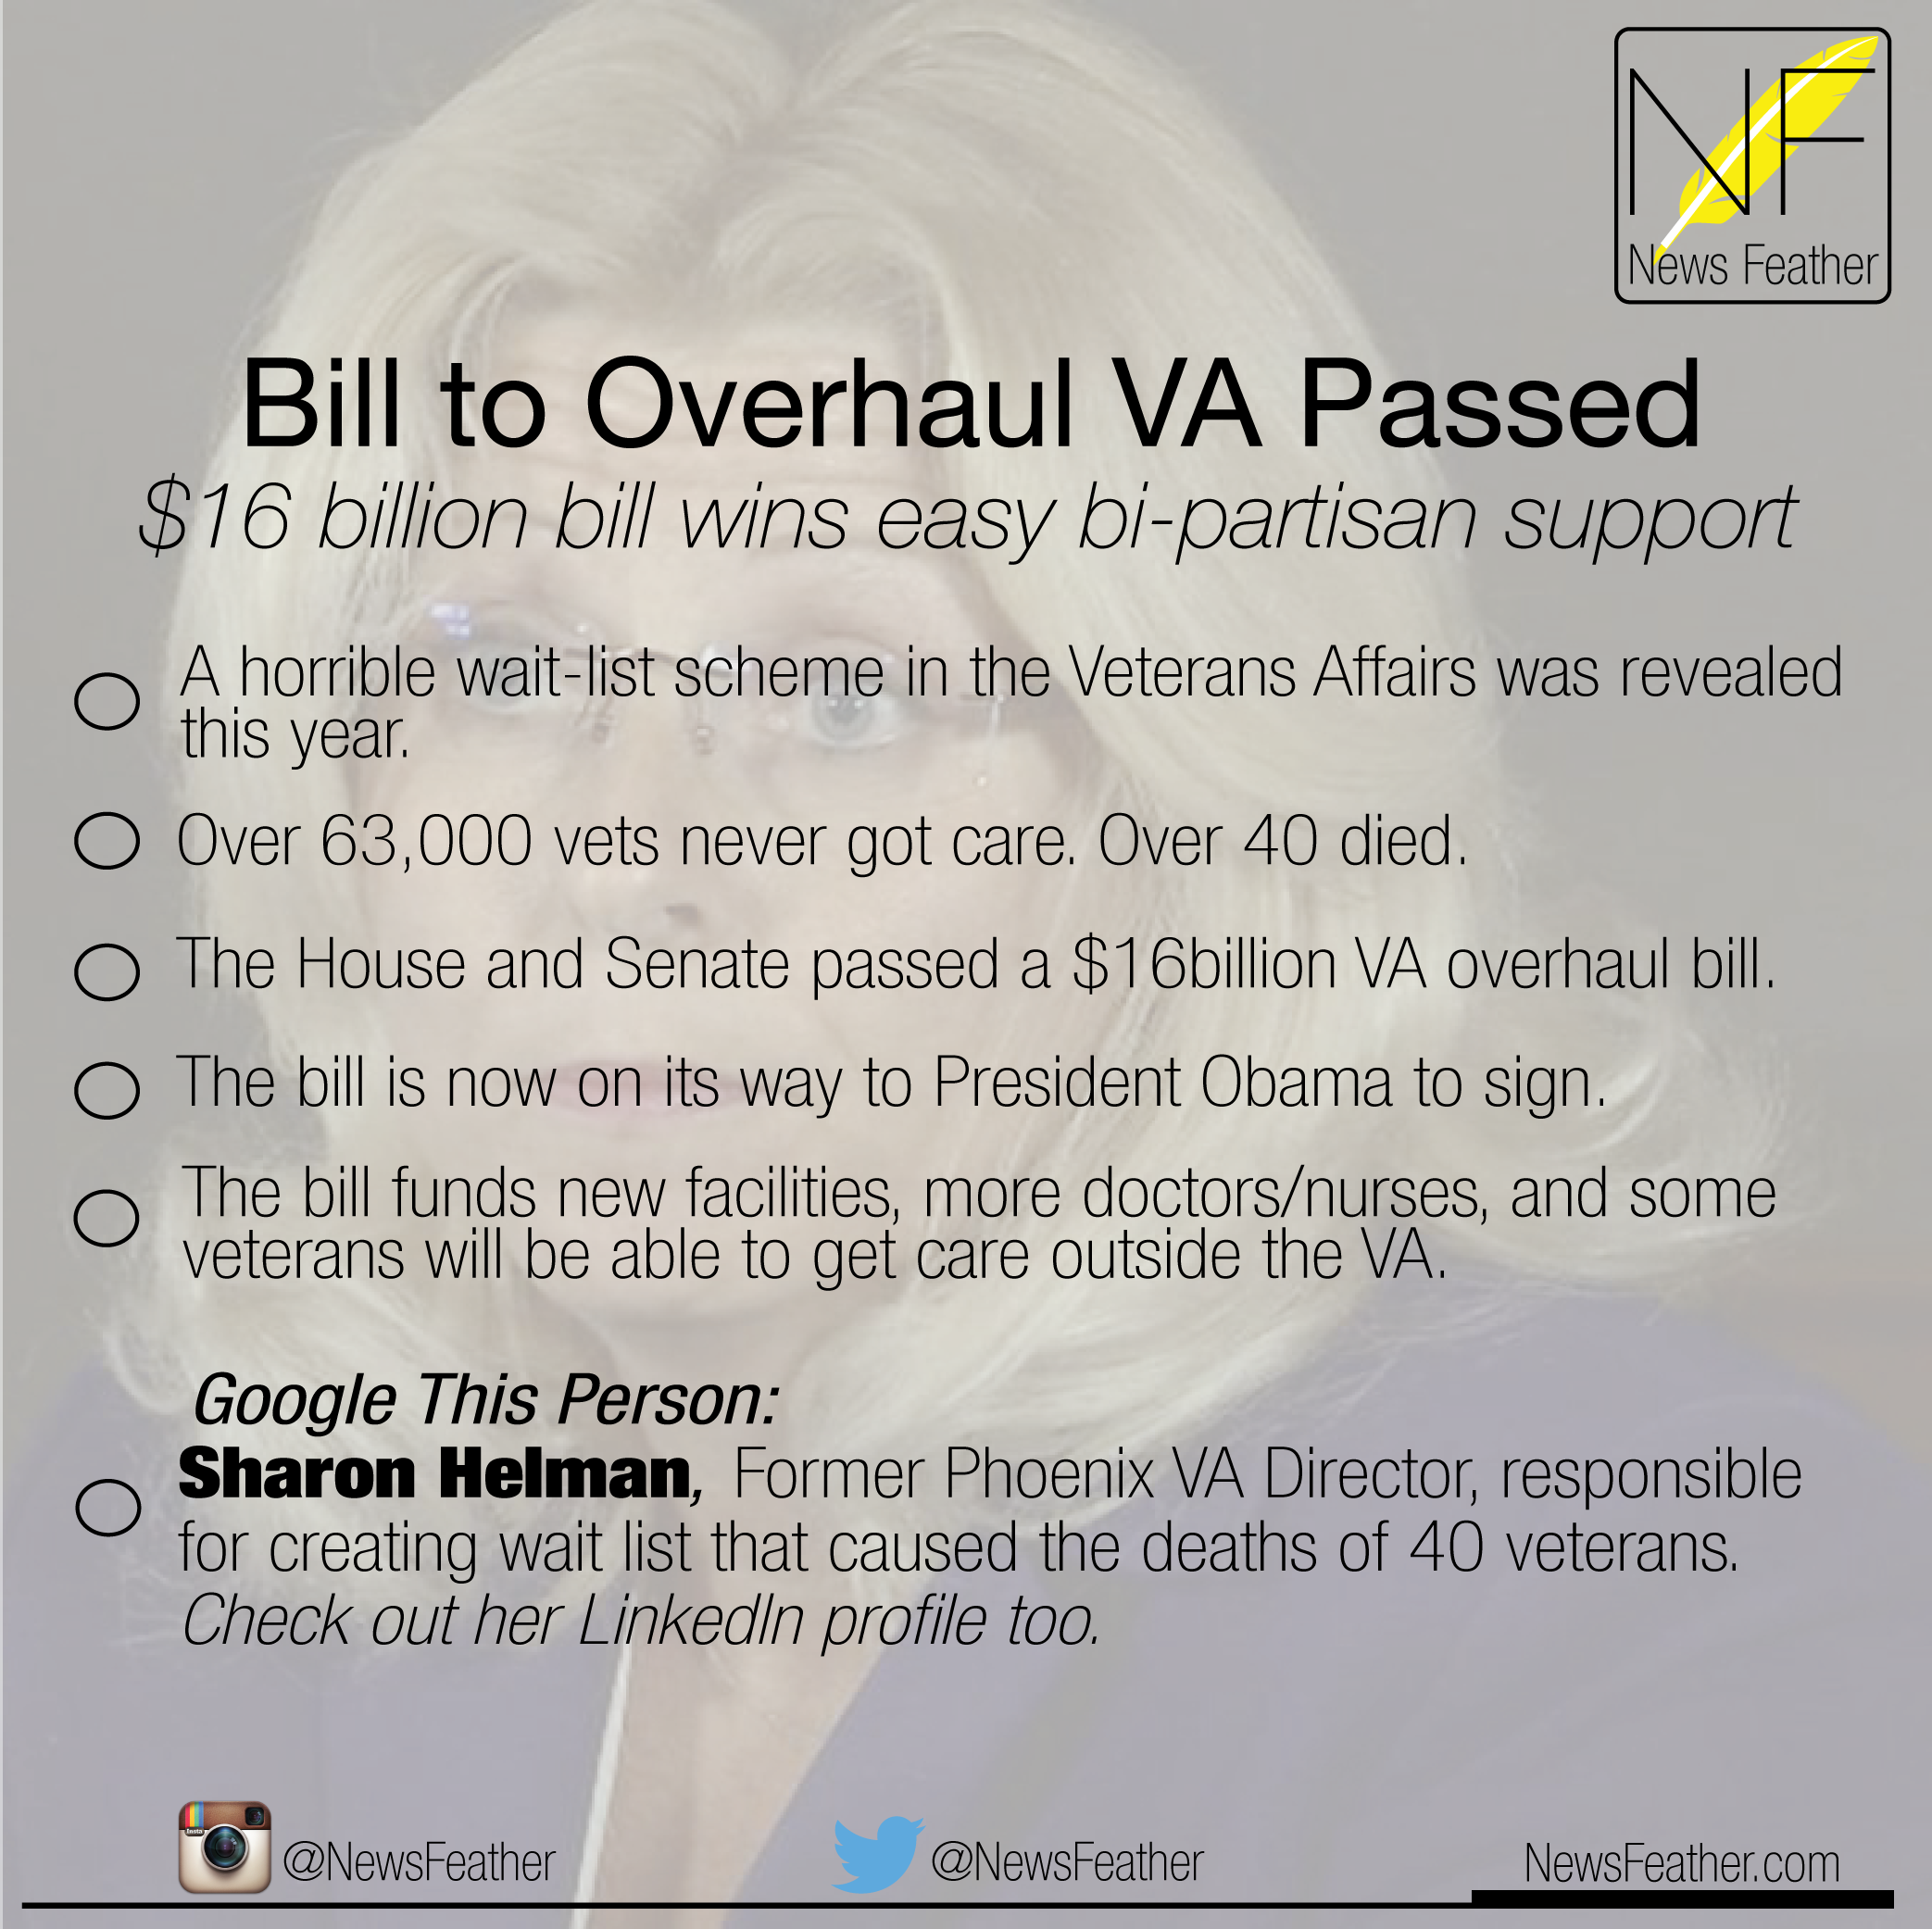 Veterans Affairs Overhaul Bill Passed